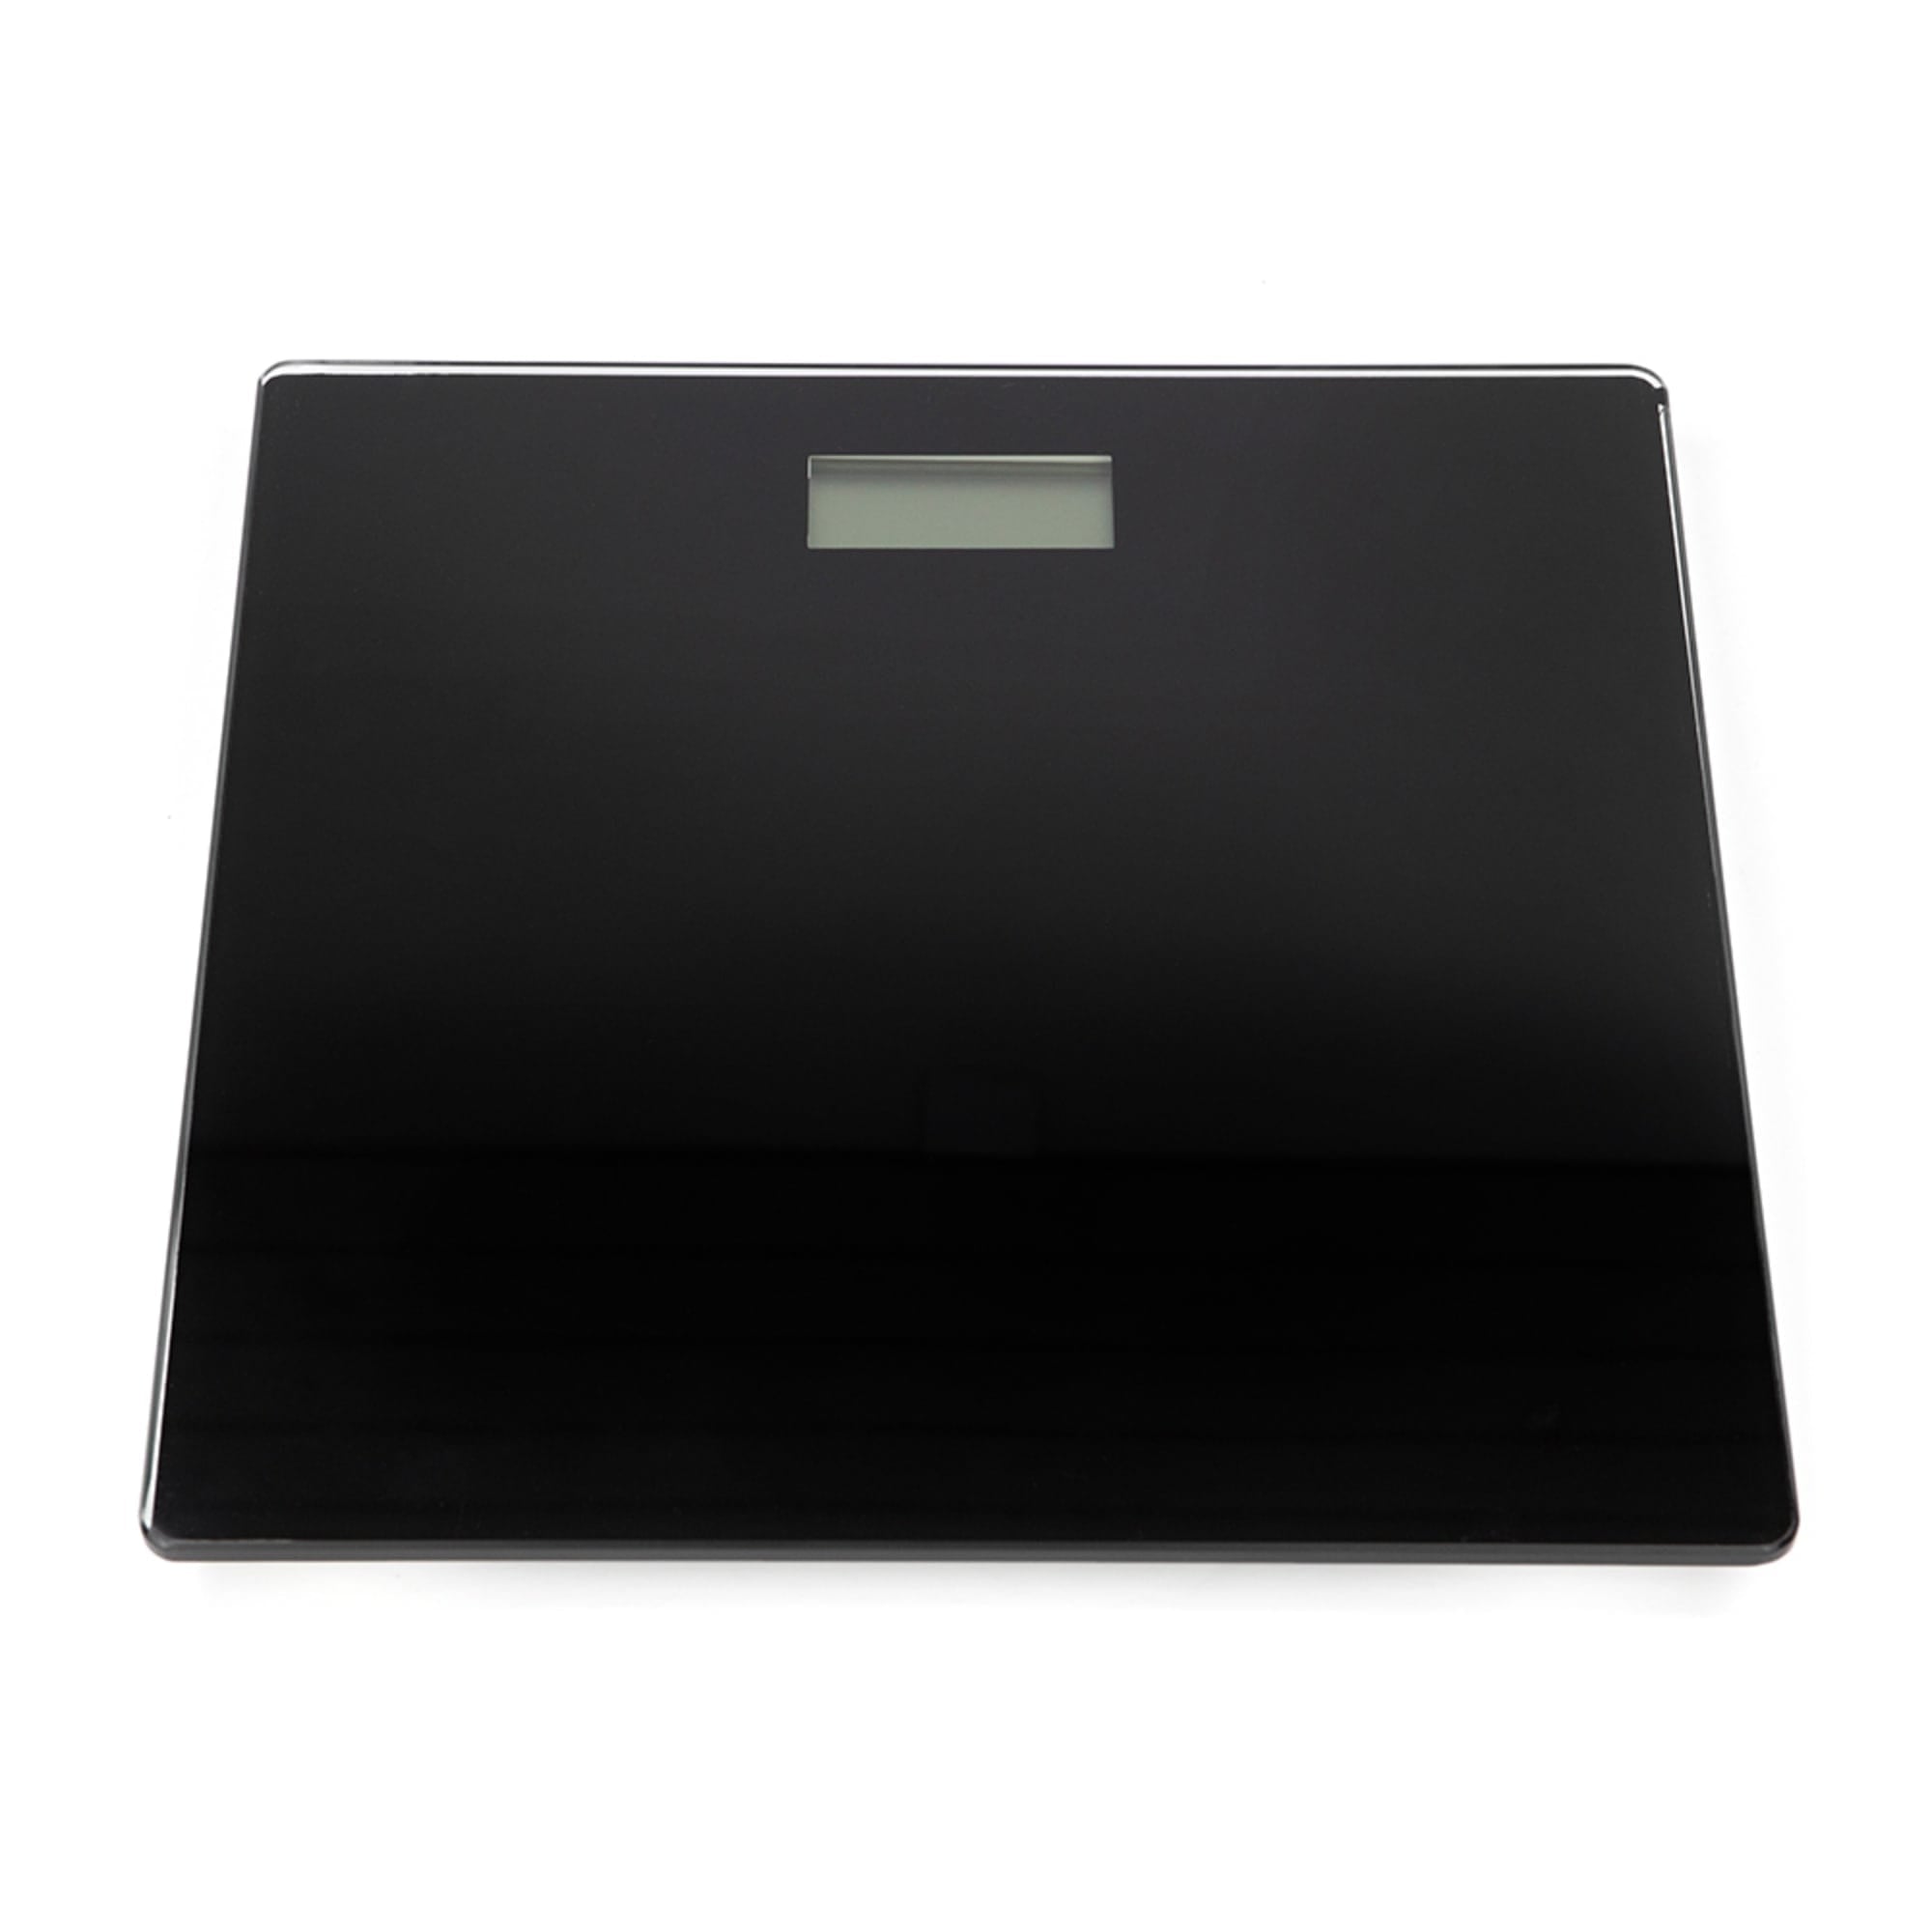 Home Basics Contemporary Sleek LCD Display Digital Glass Bathroom Scale, Black $10.00 EACH, CASE PACK OF 6